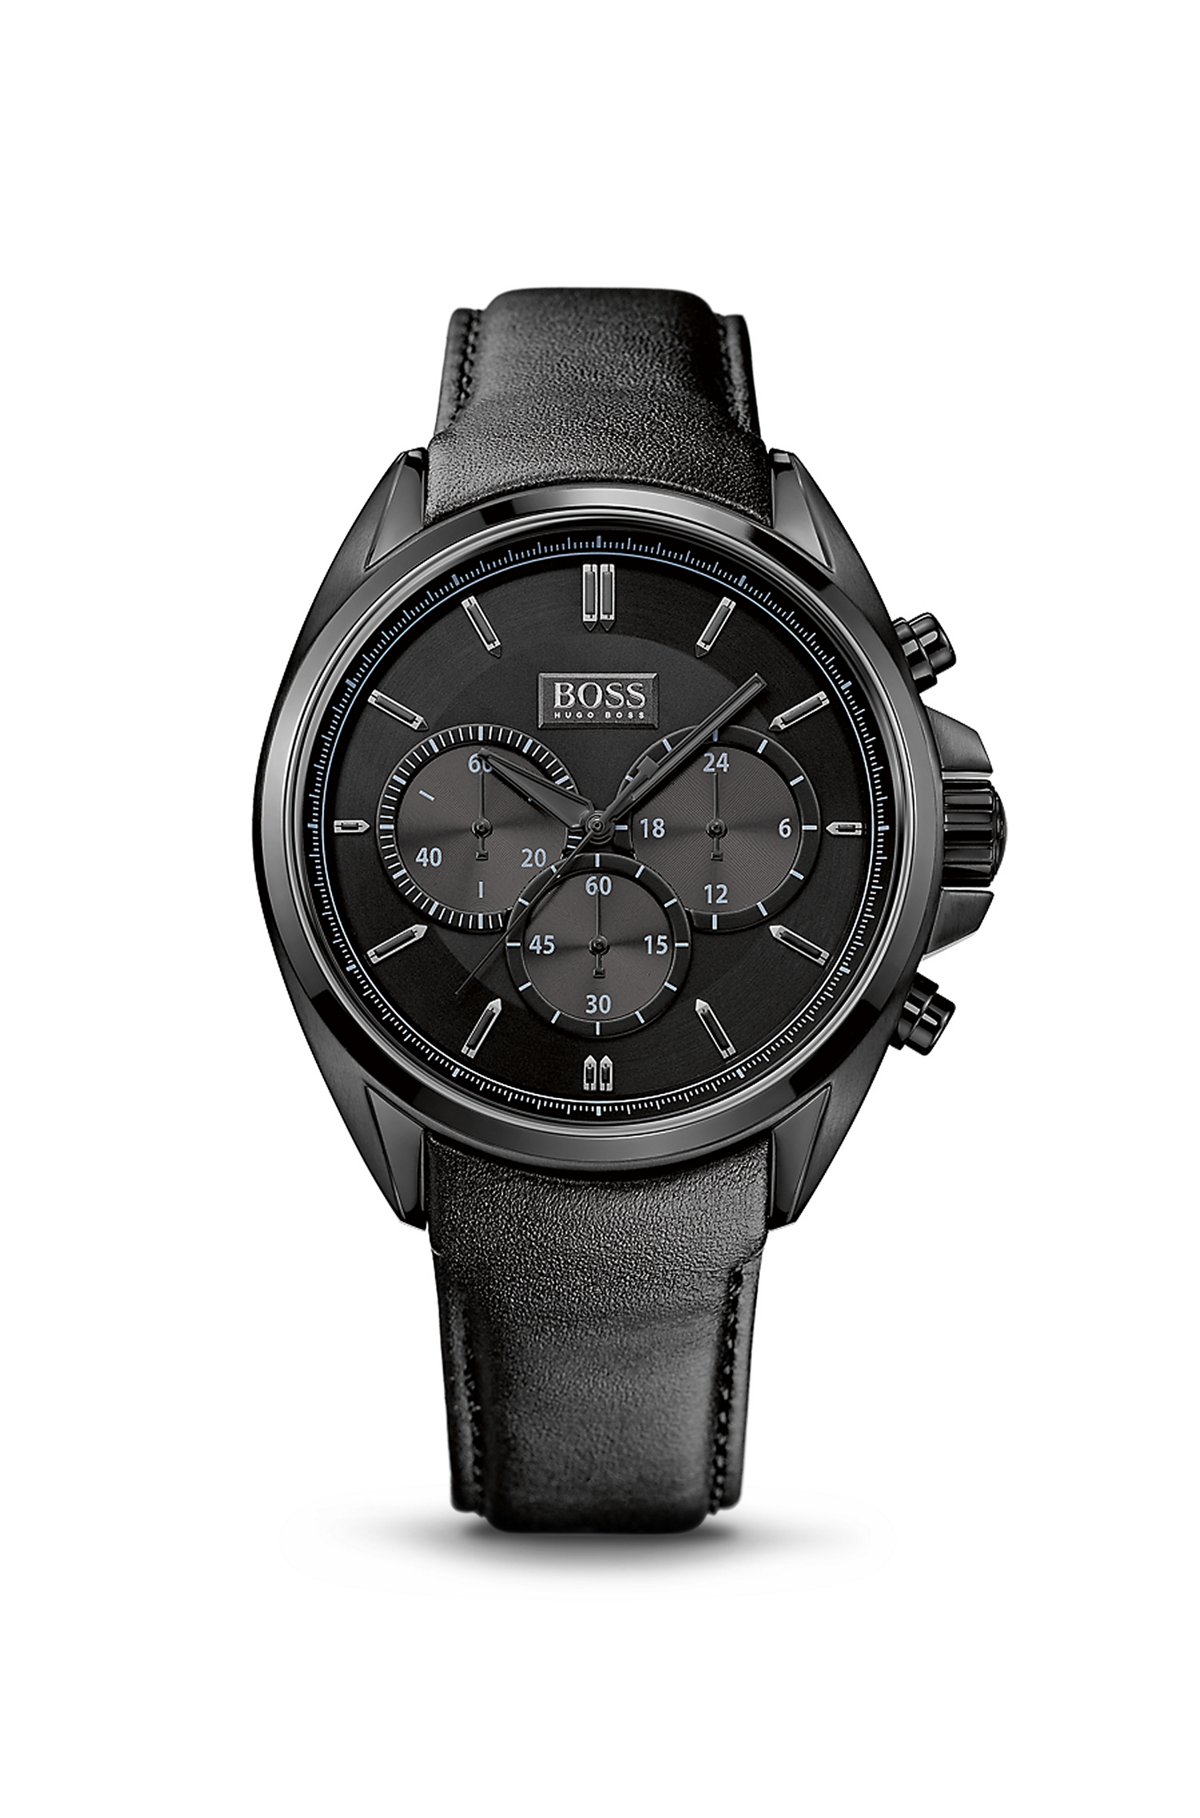 Часы Boss Hugo Boss. Часы Хуго босс мужские. Часы Boss Hugo Boss мужские. Hugo Boss часы 508106. Наручные часы hugo